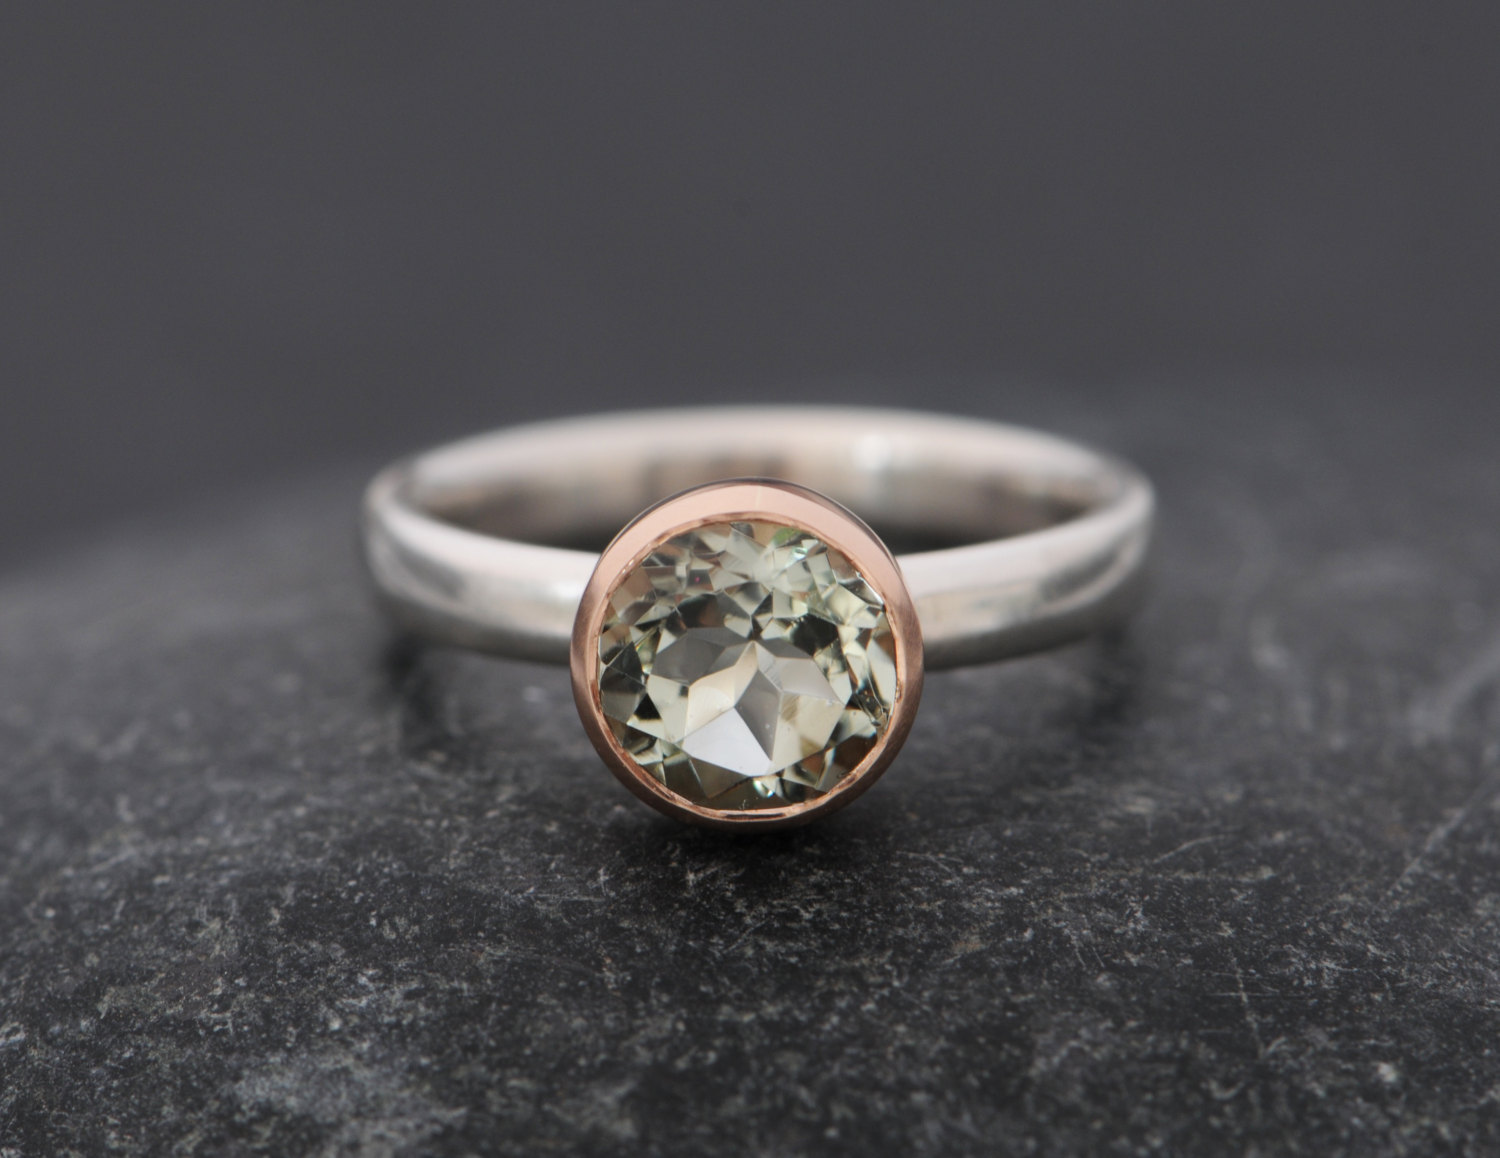 pale green amethyst set in gold bezel on sterling silver ring